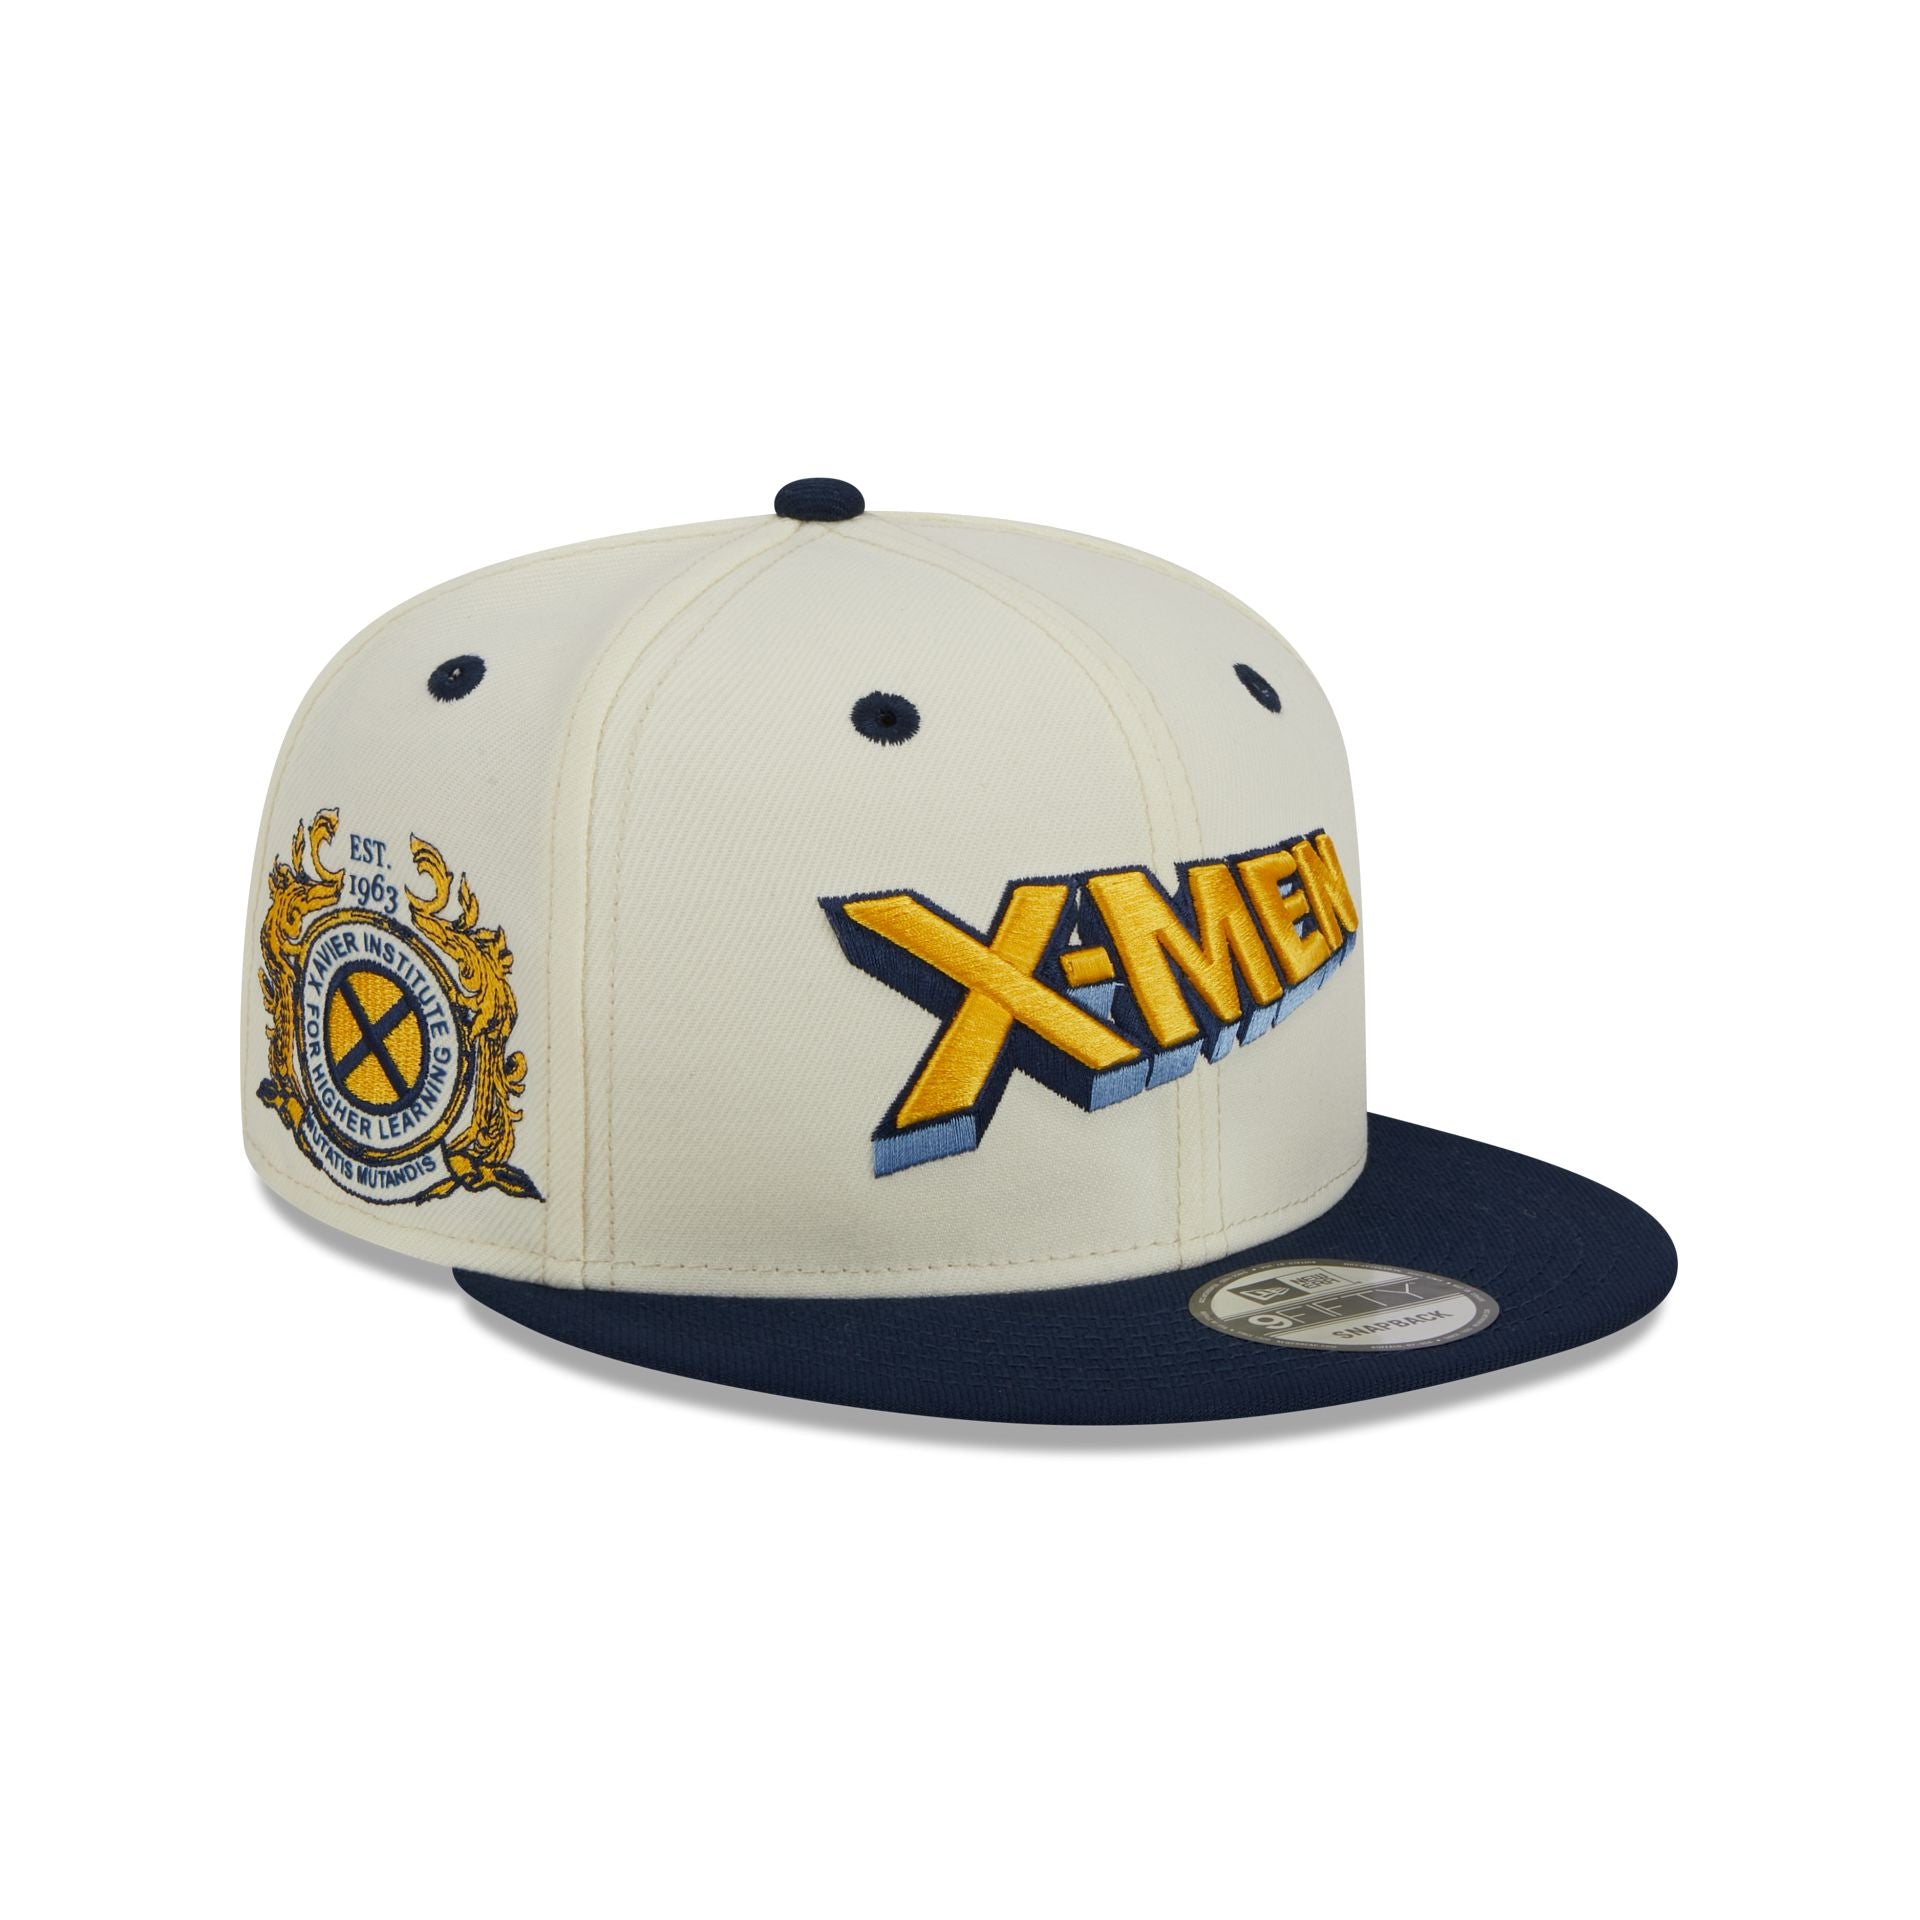 New Era X-Men Classic 9FIFTY Snapback Hat